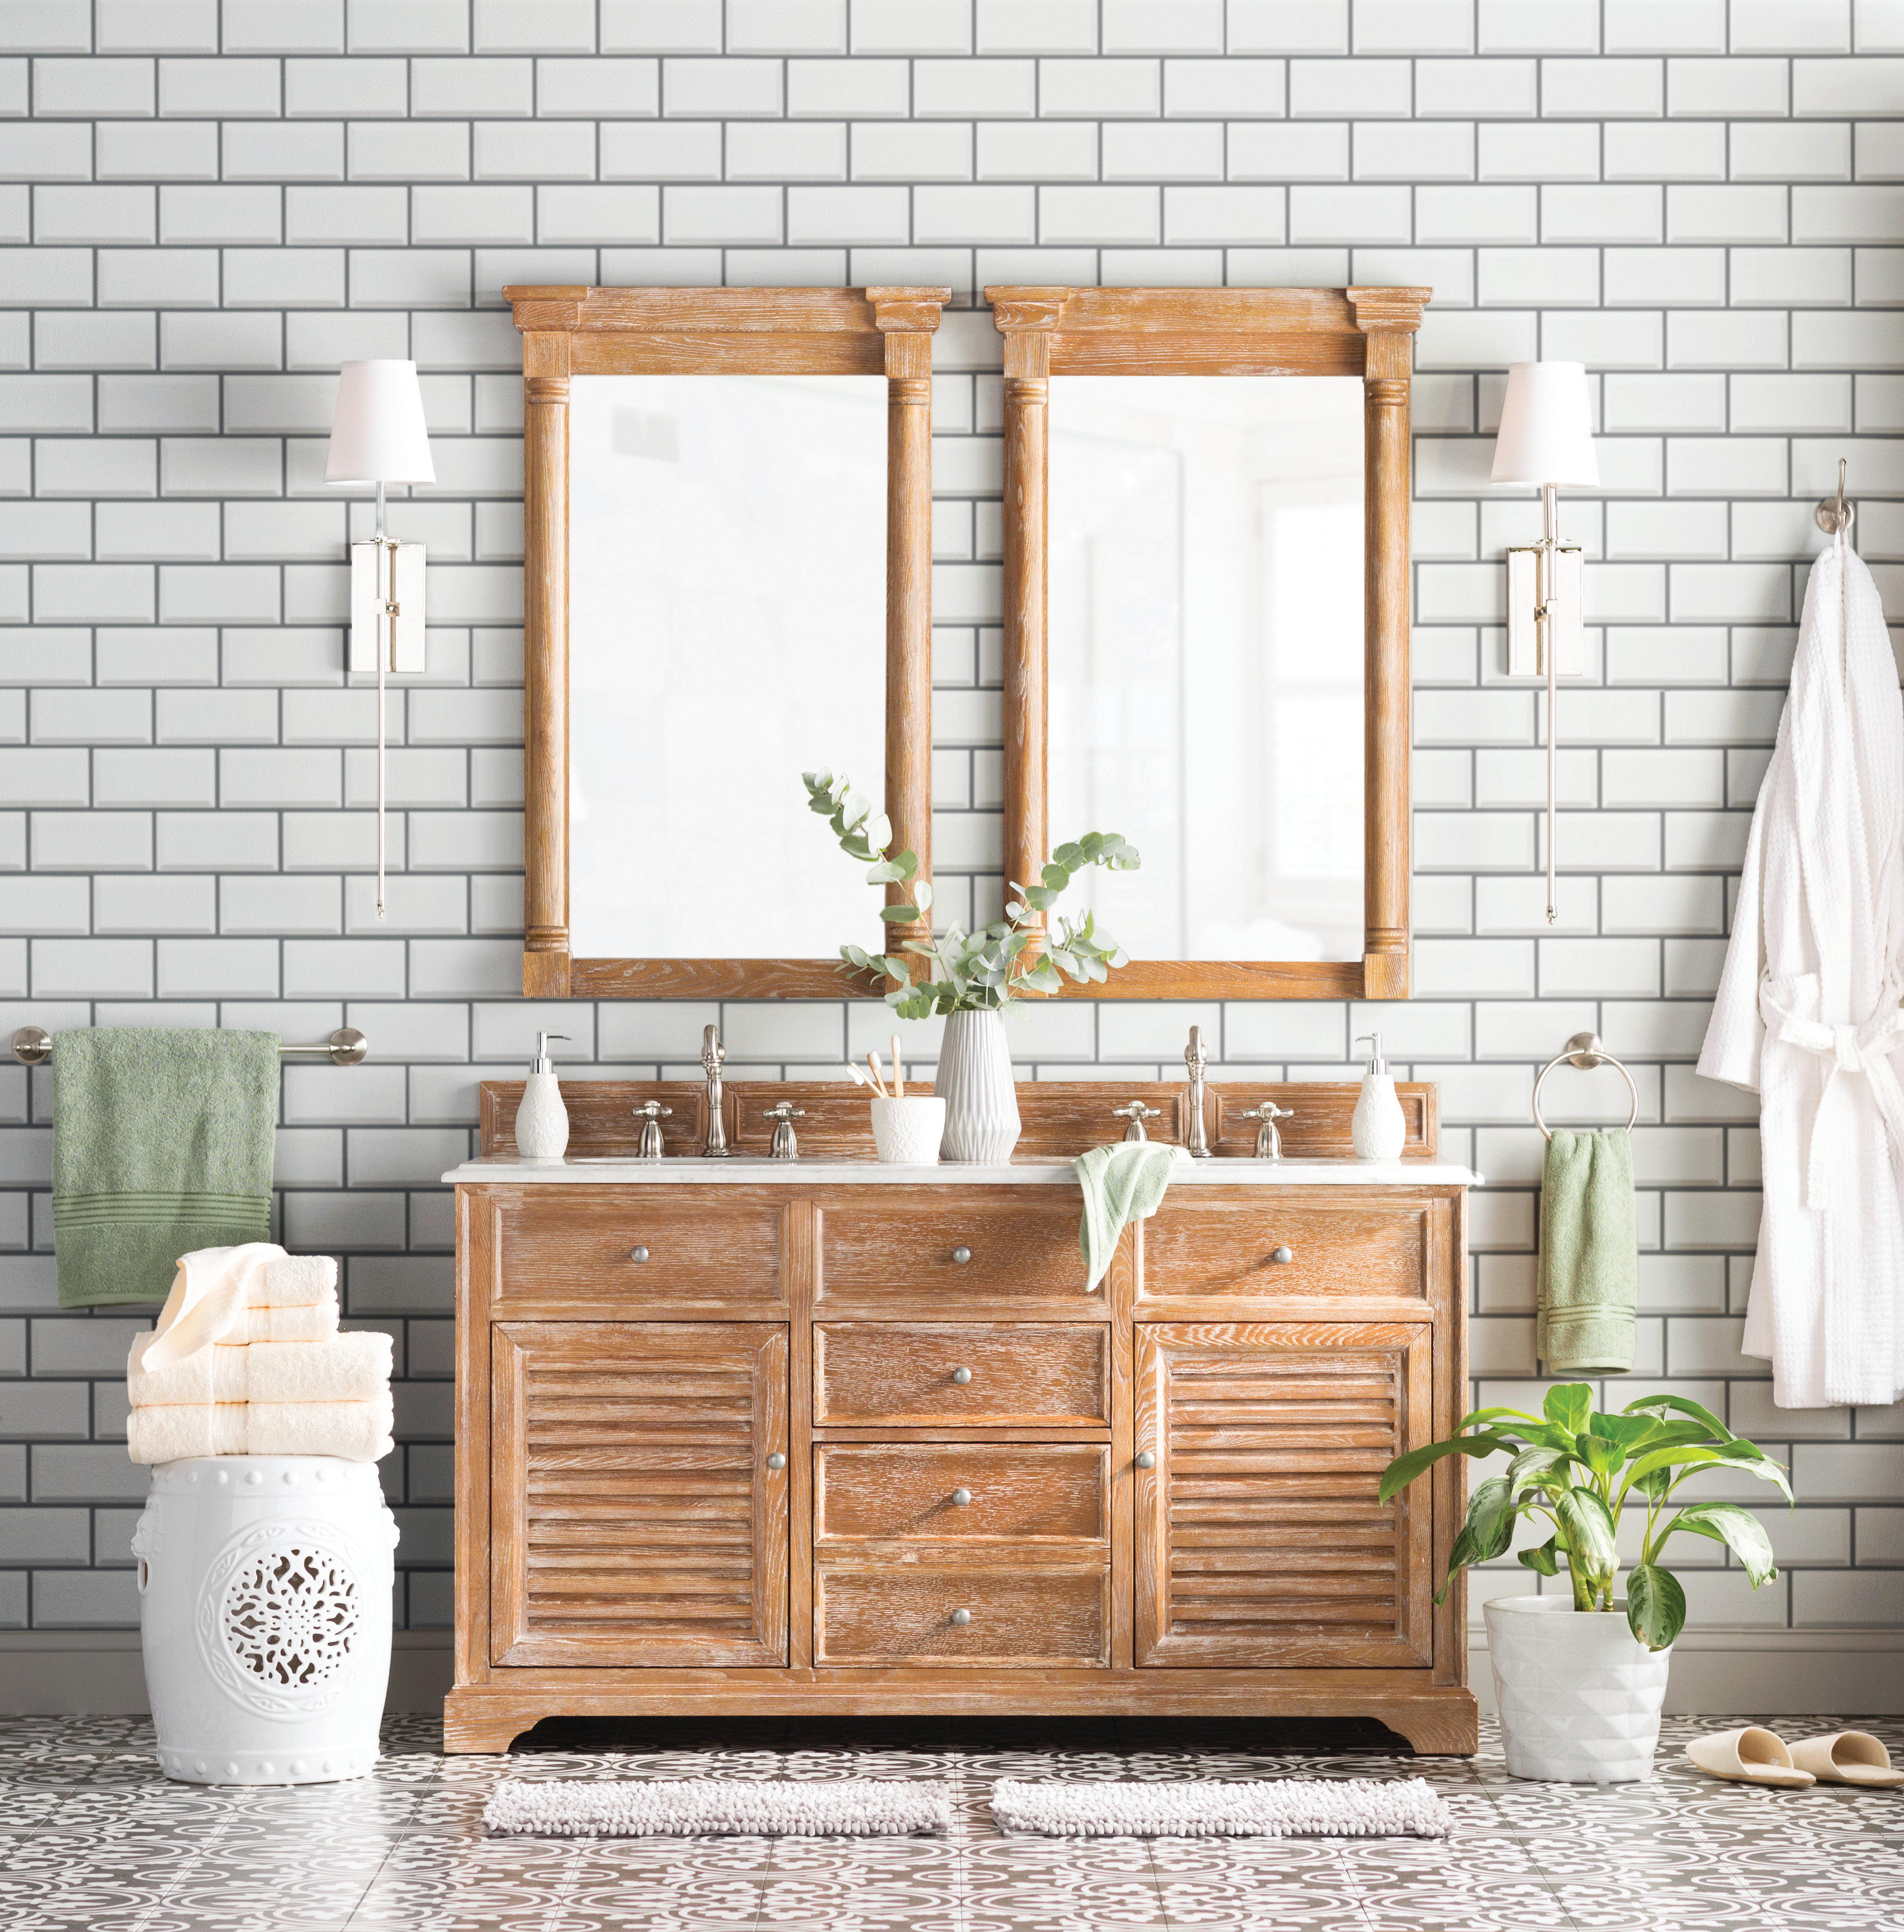 12 Beautiful Bathroom Decor Ideas Wayfair